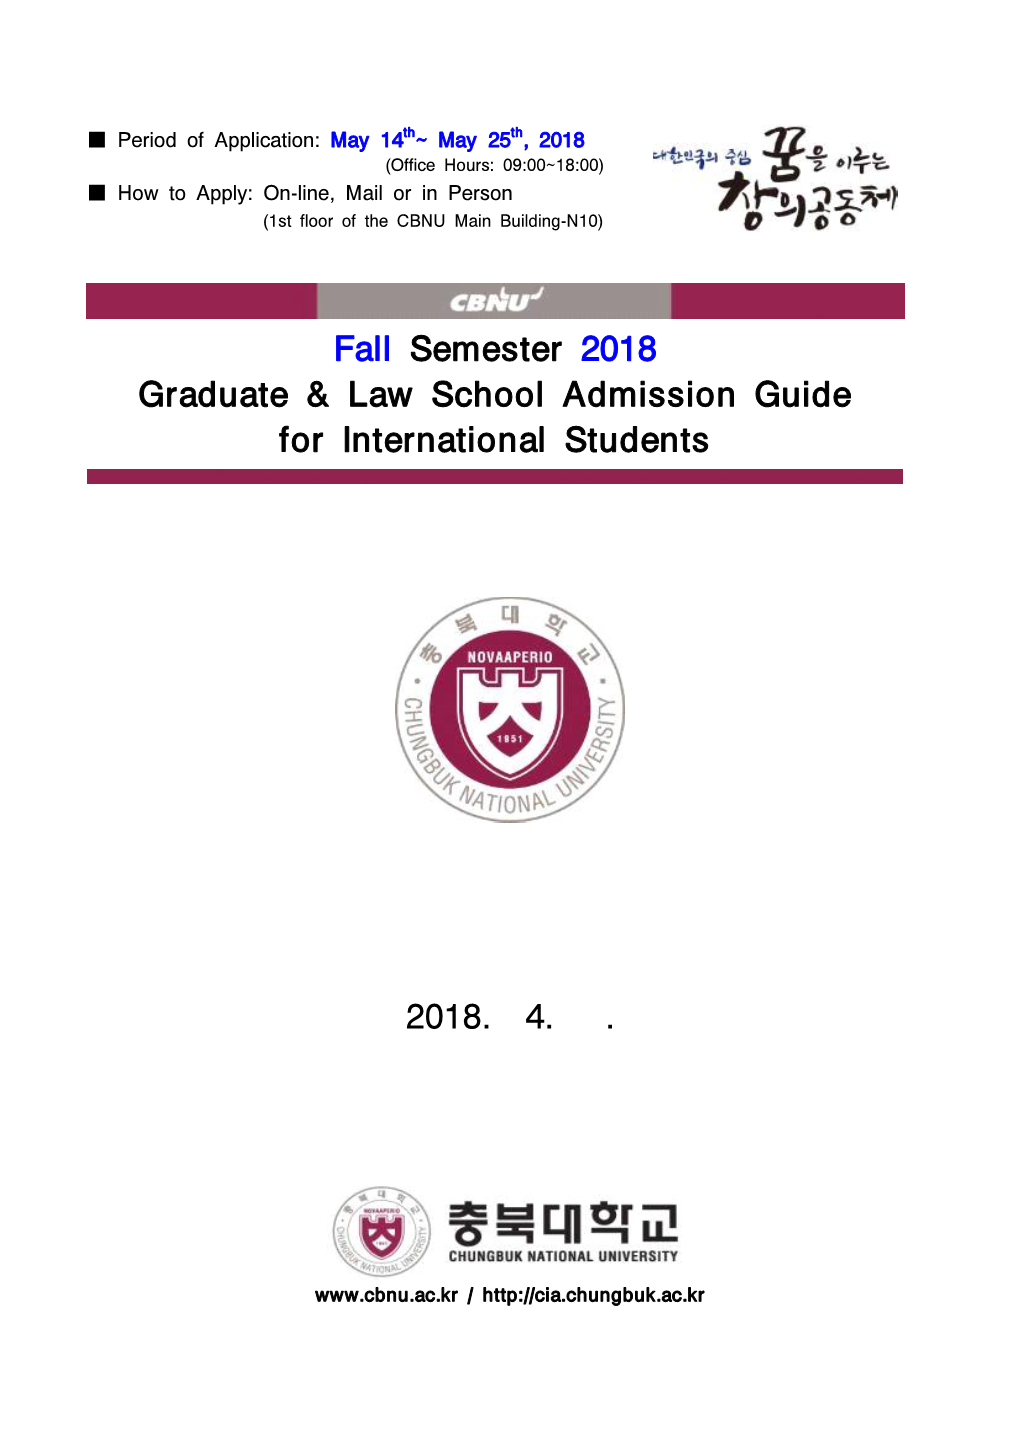 Fall Semester 2018 Graduate & Law School Admission